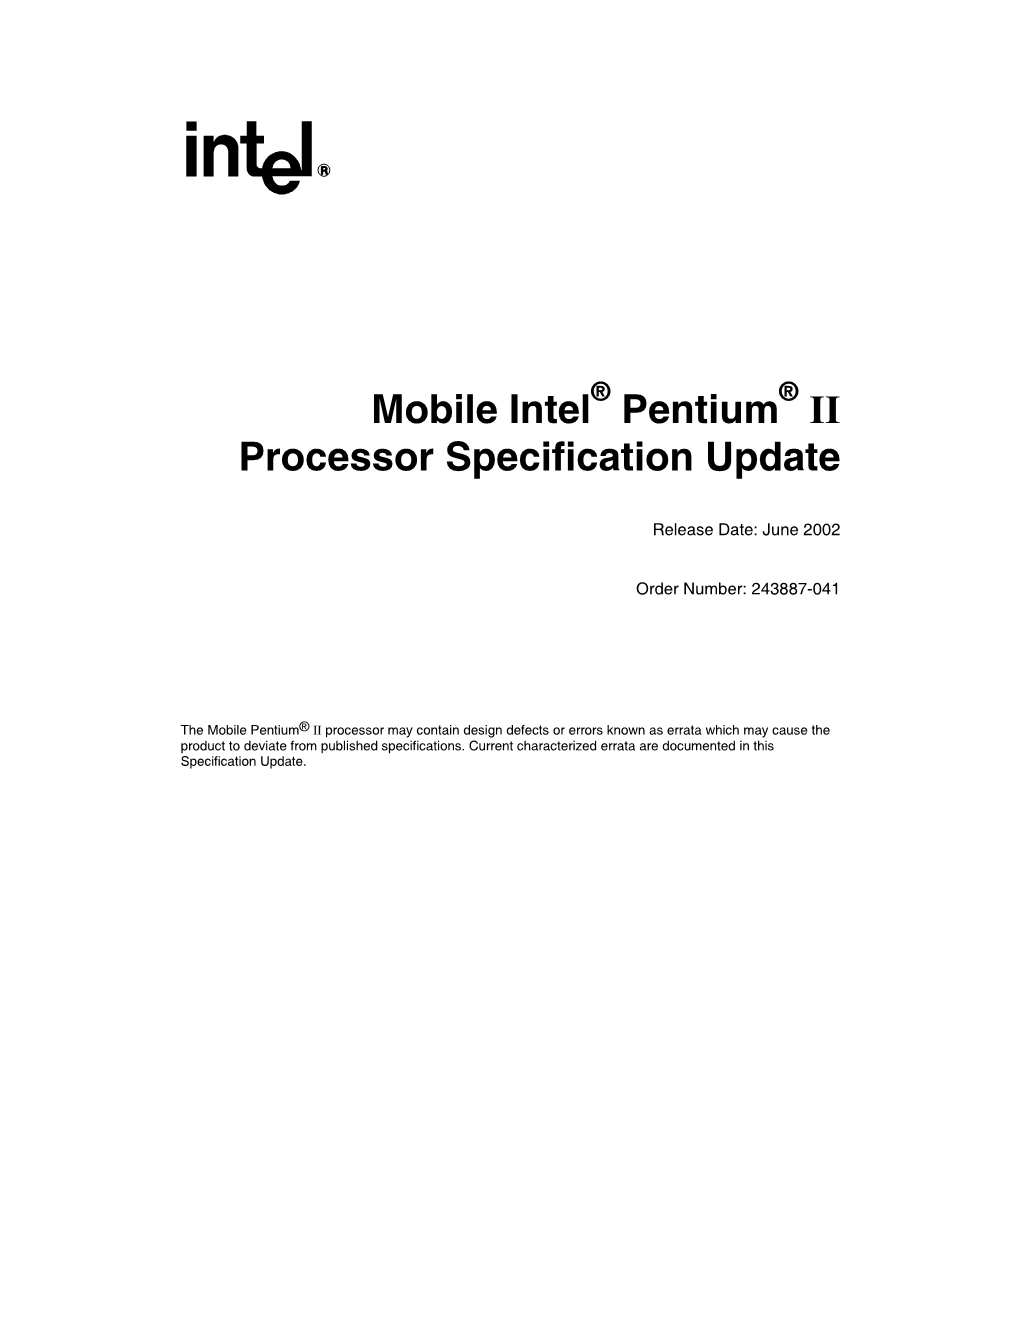 Intel's Mobile Pentium II Specifications